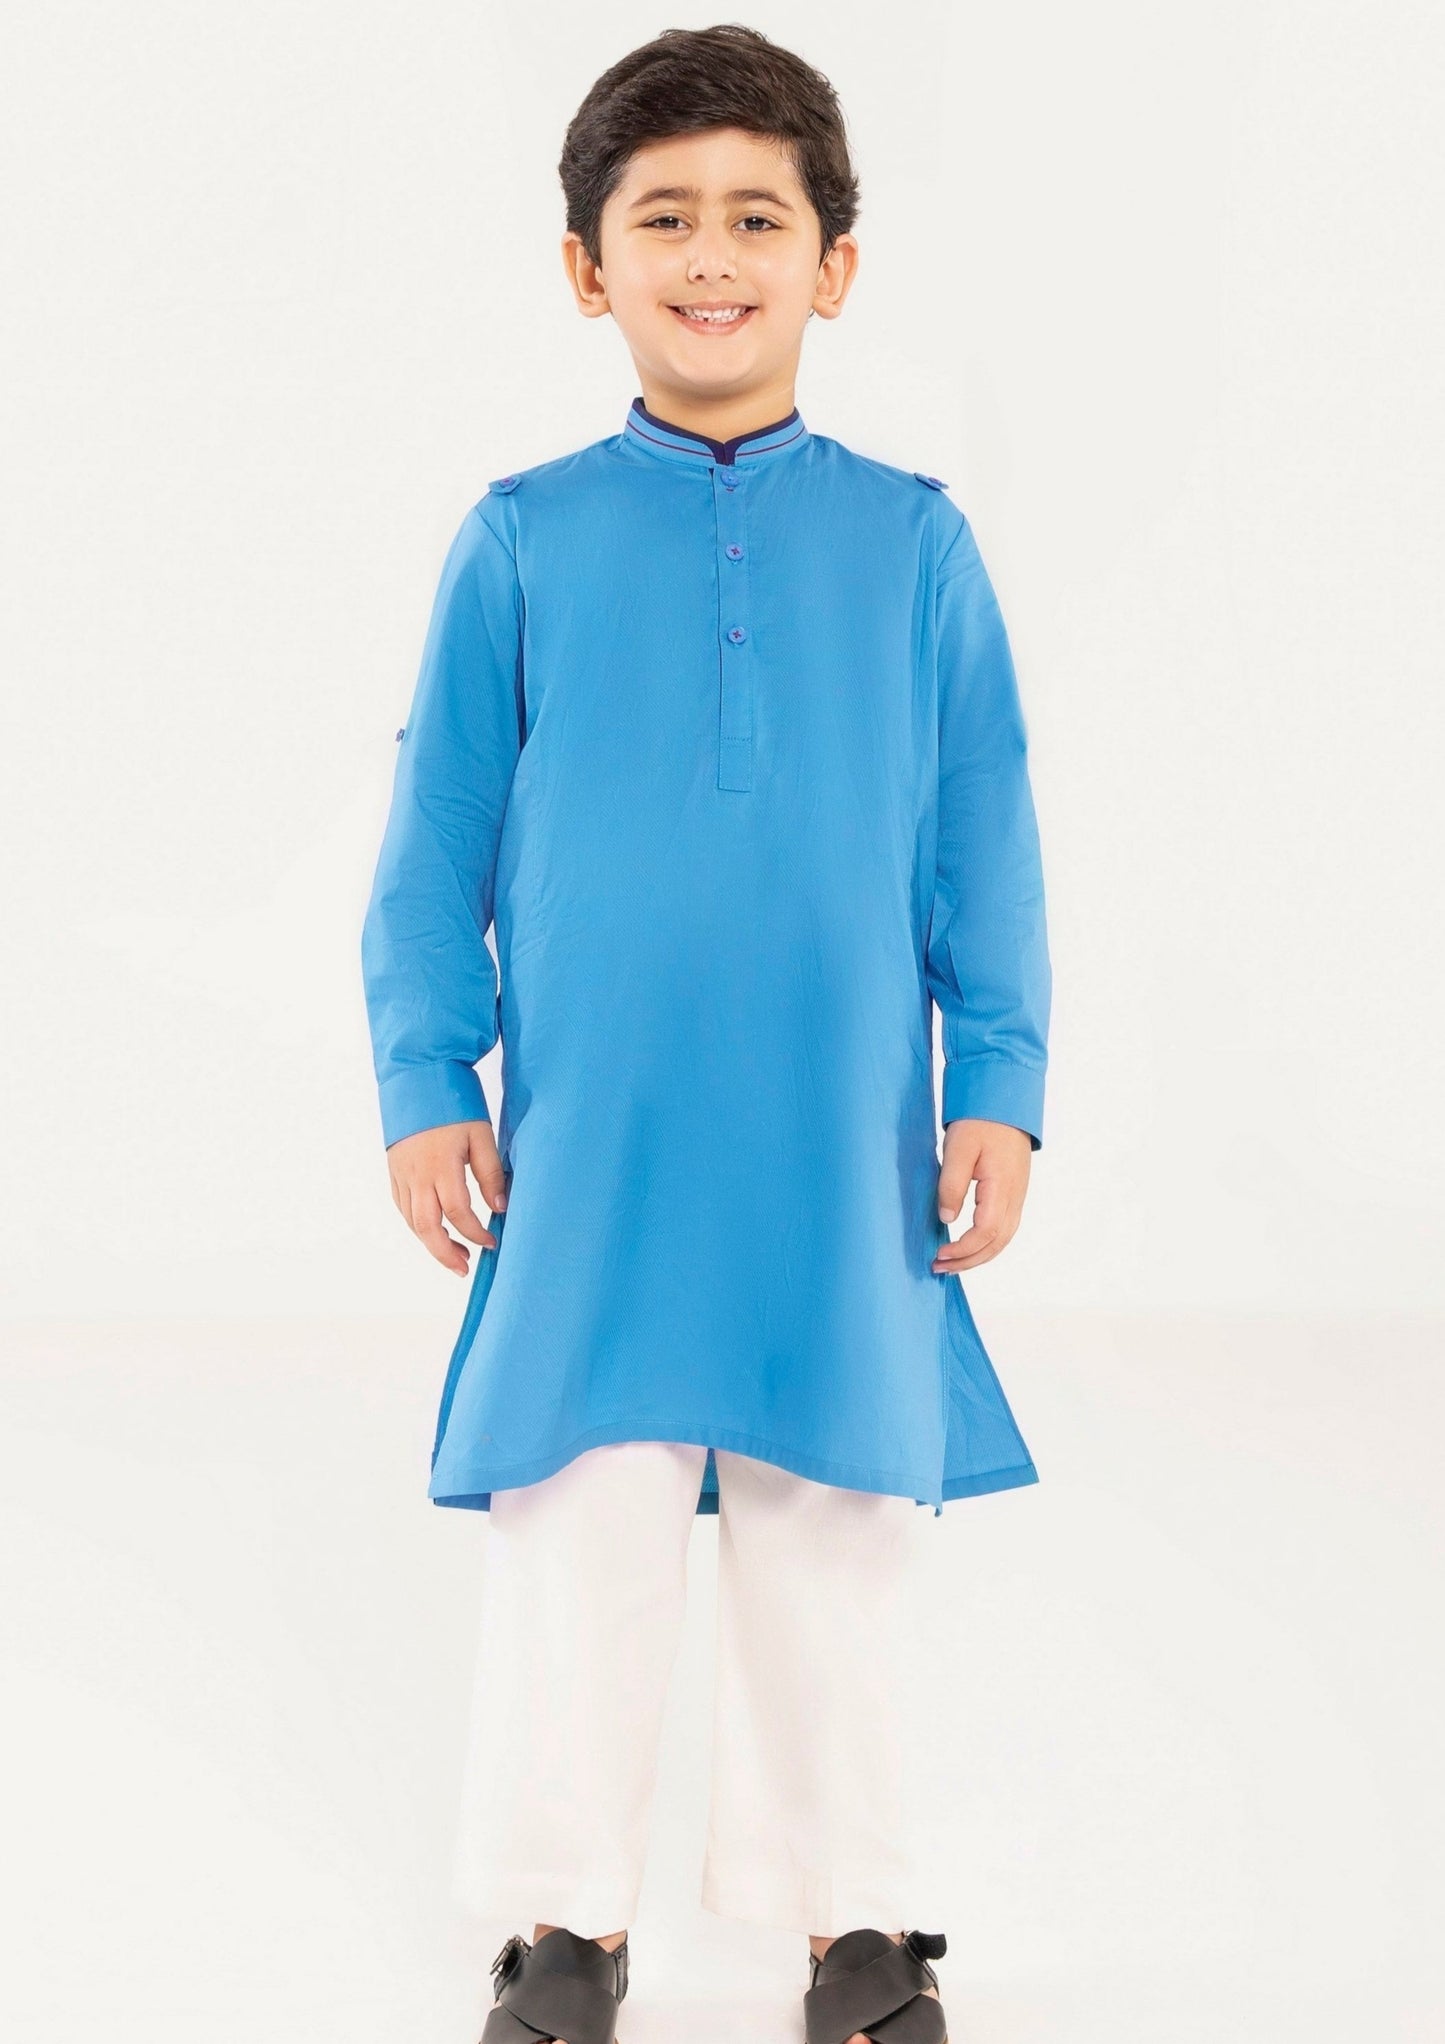 Blue & off white : Boy's Kurta Shalwar